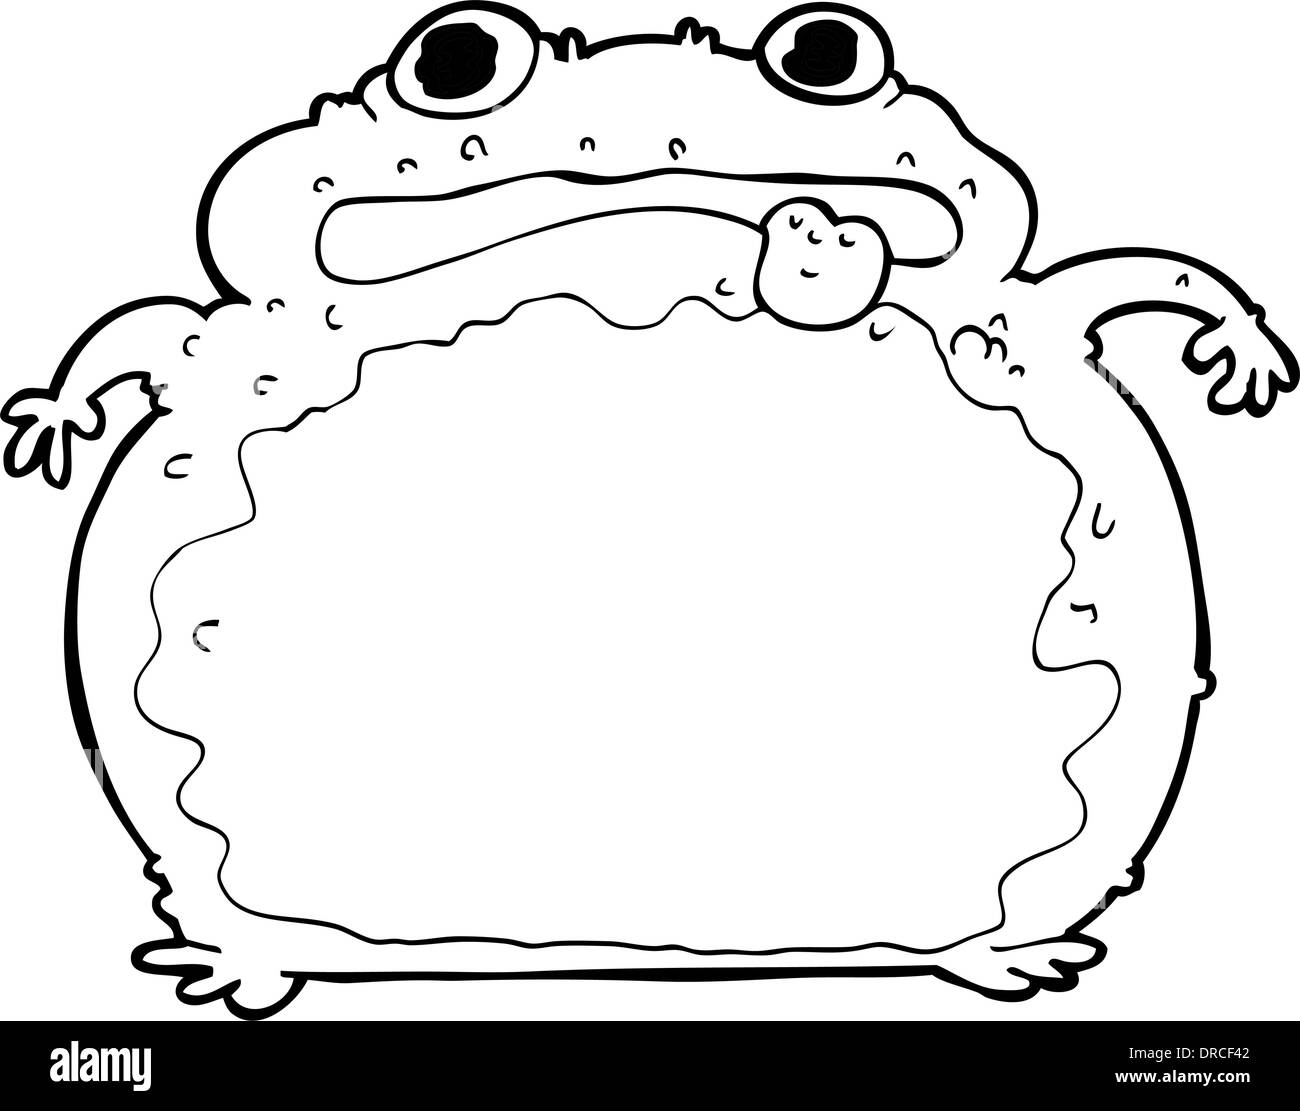 cartoon funny frog Stock Vector